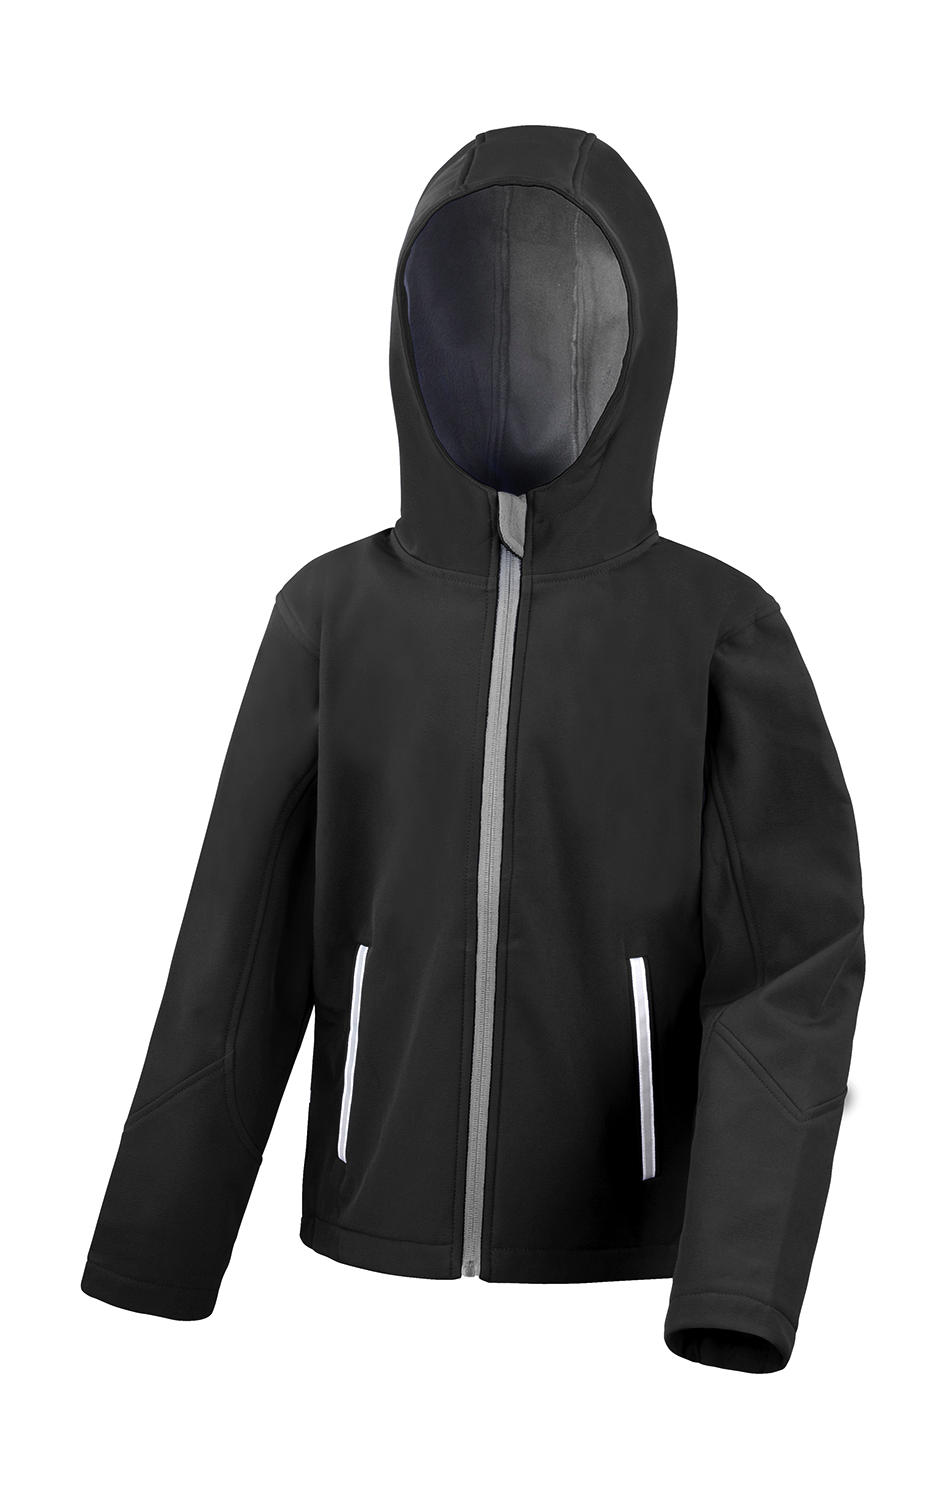  Kids TX Performance Hooded Softshell Jacket in Farbe Black/Grey